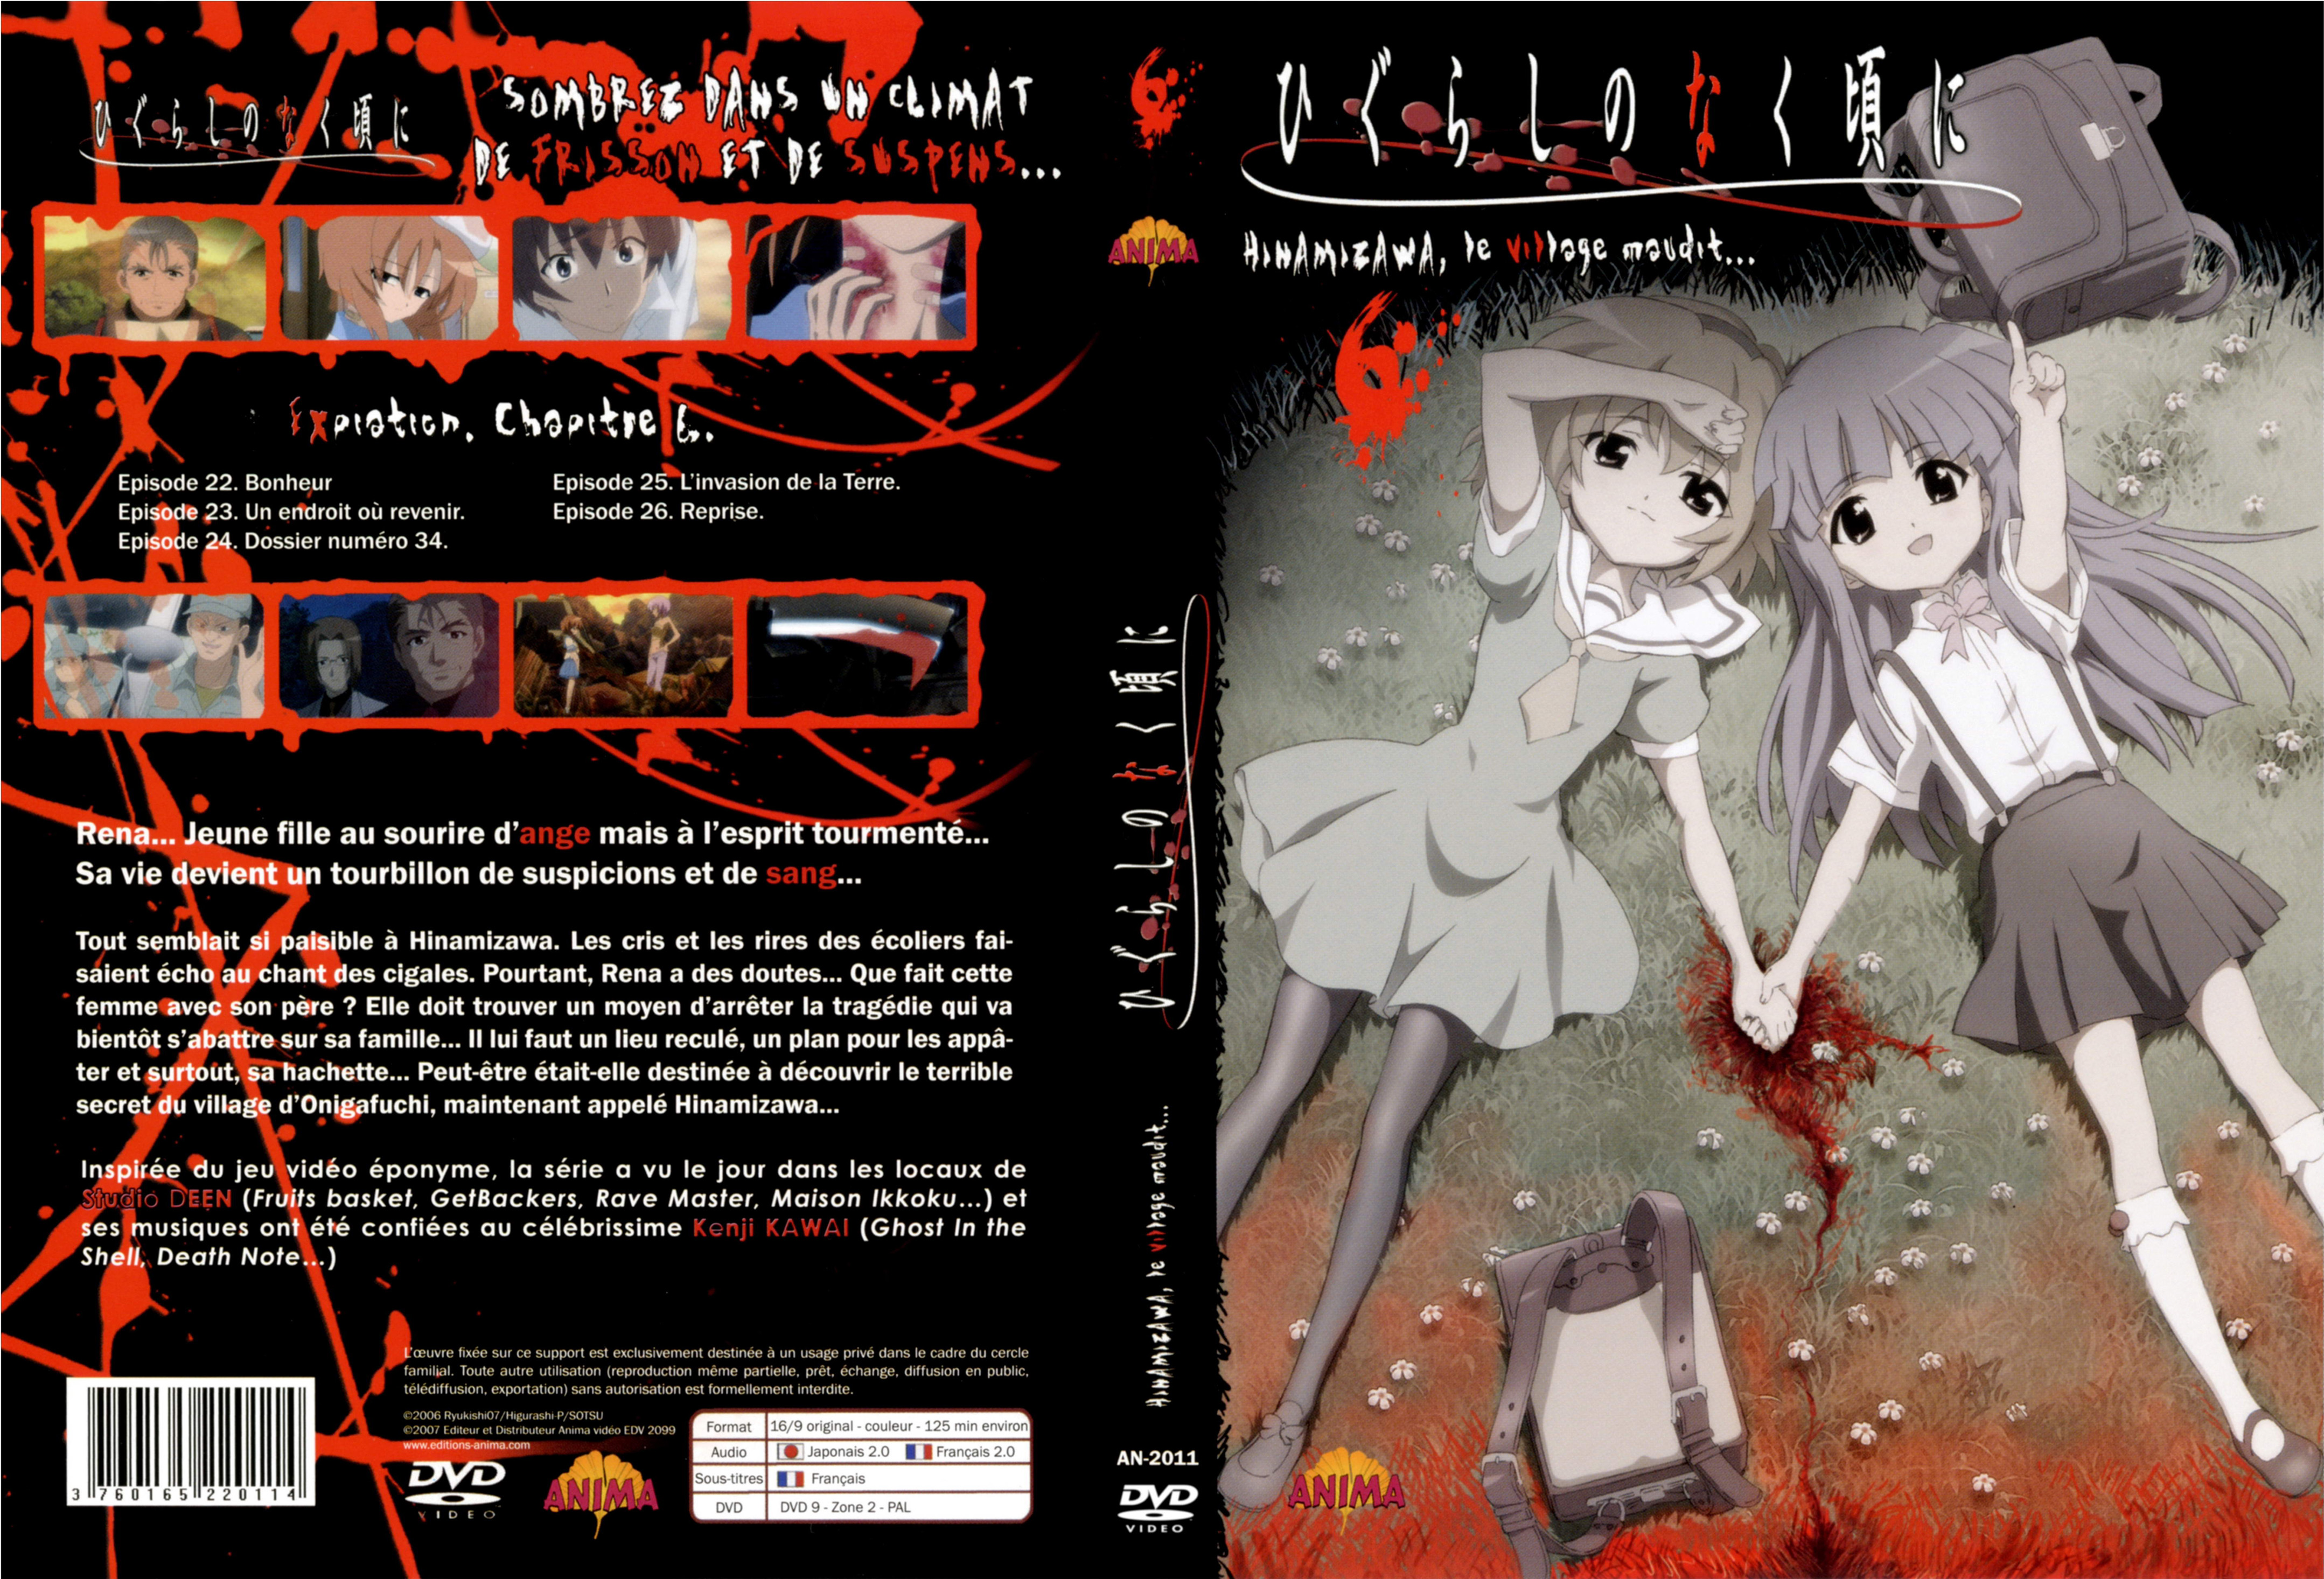 Jaquette DVD Hinamizawa le village maudit DVD 6